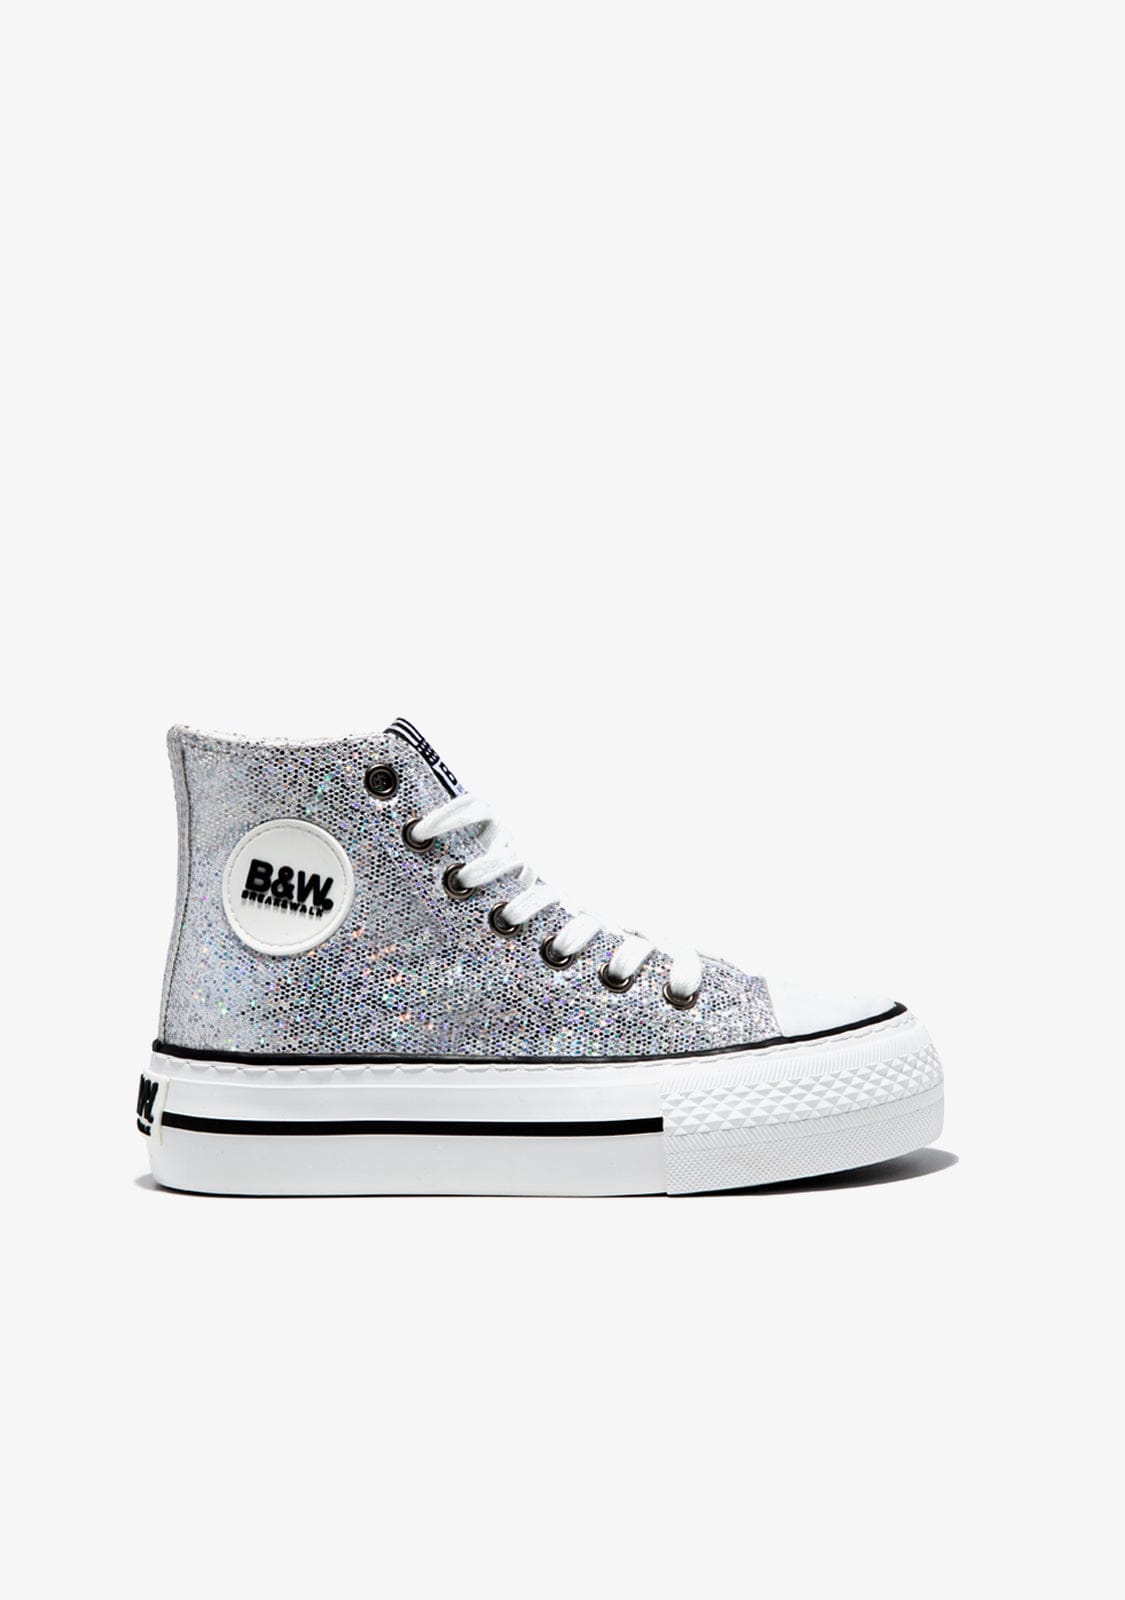 B&W JUNIOR Shoes Girl's Silver Glitter Hi-Top Sneakers B&W